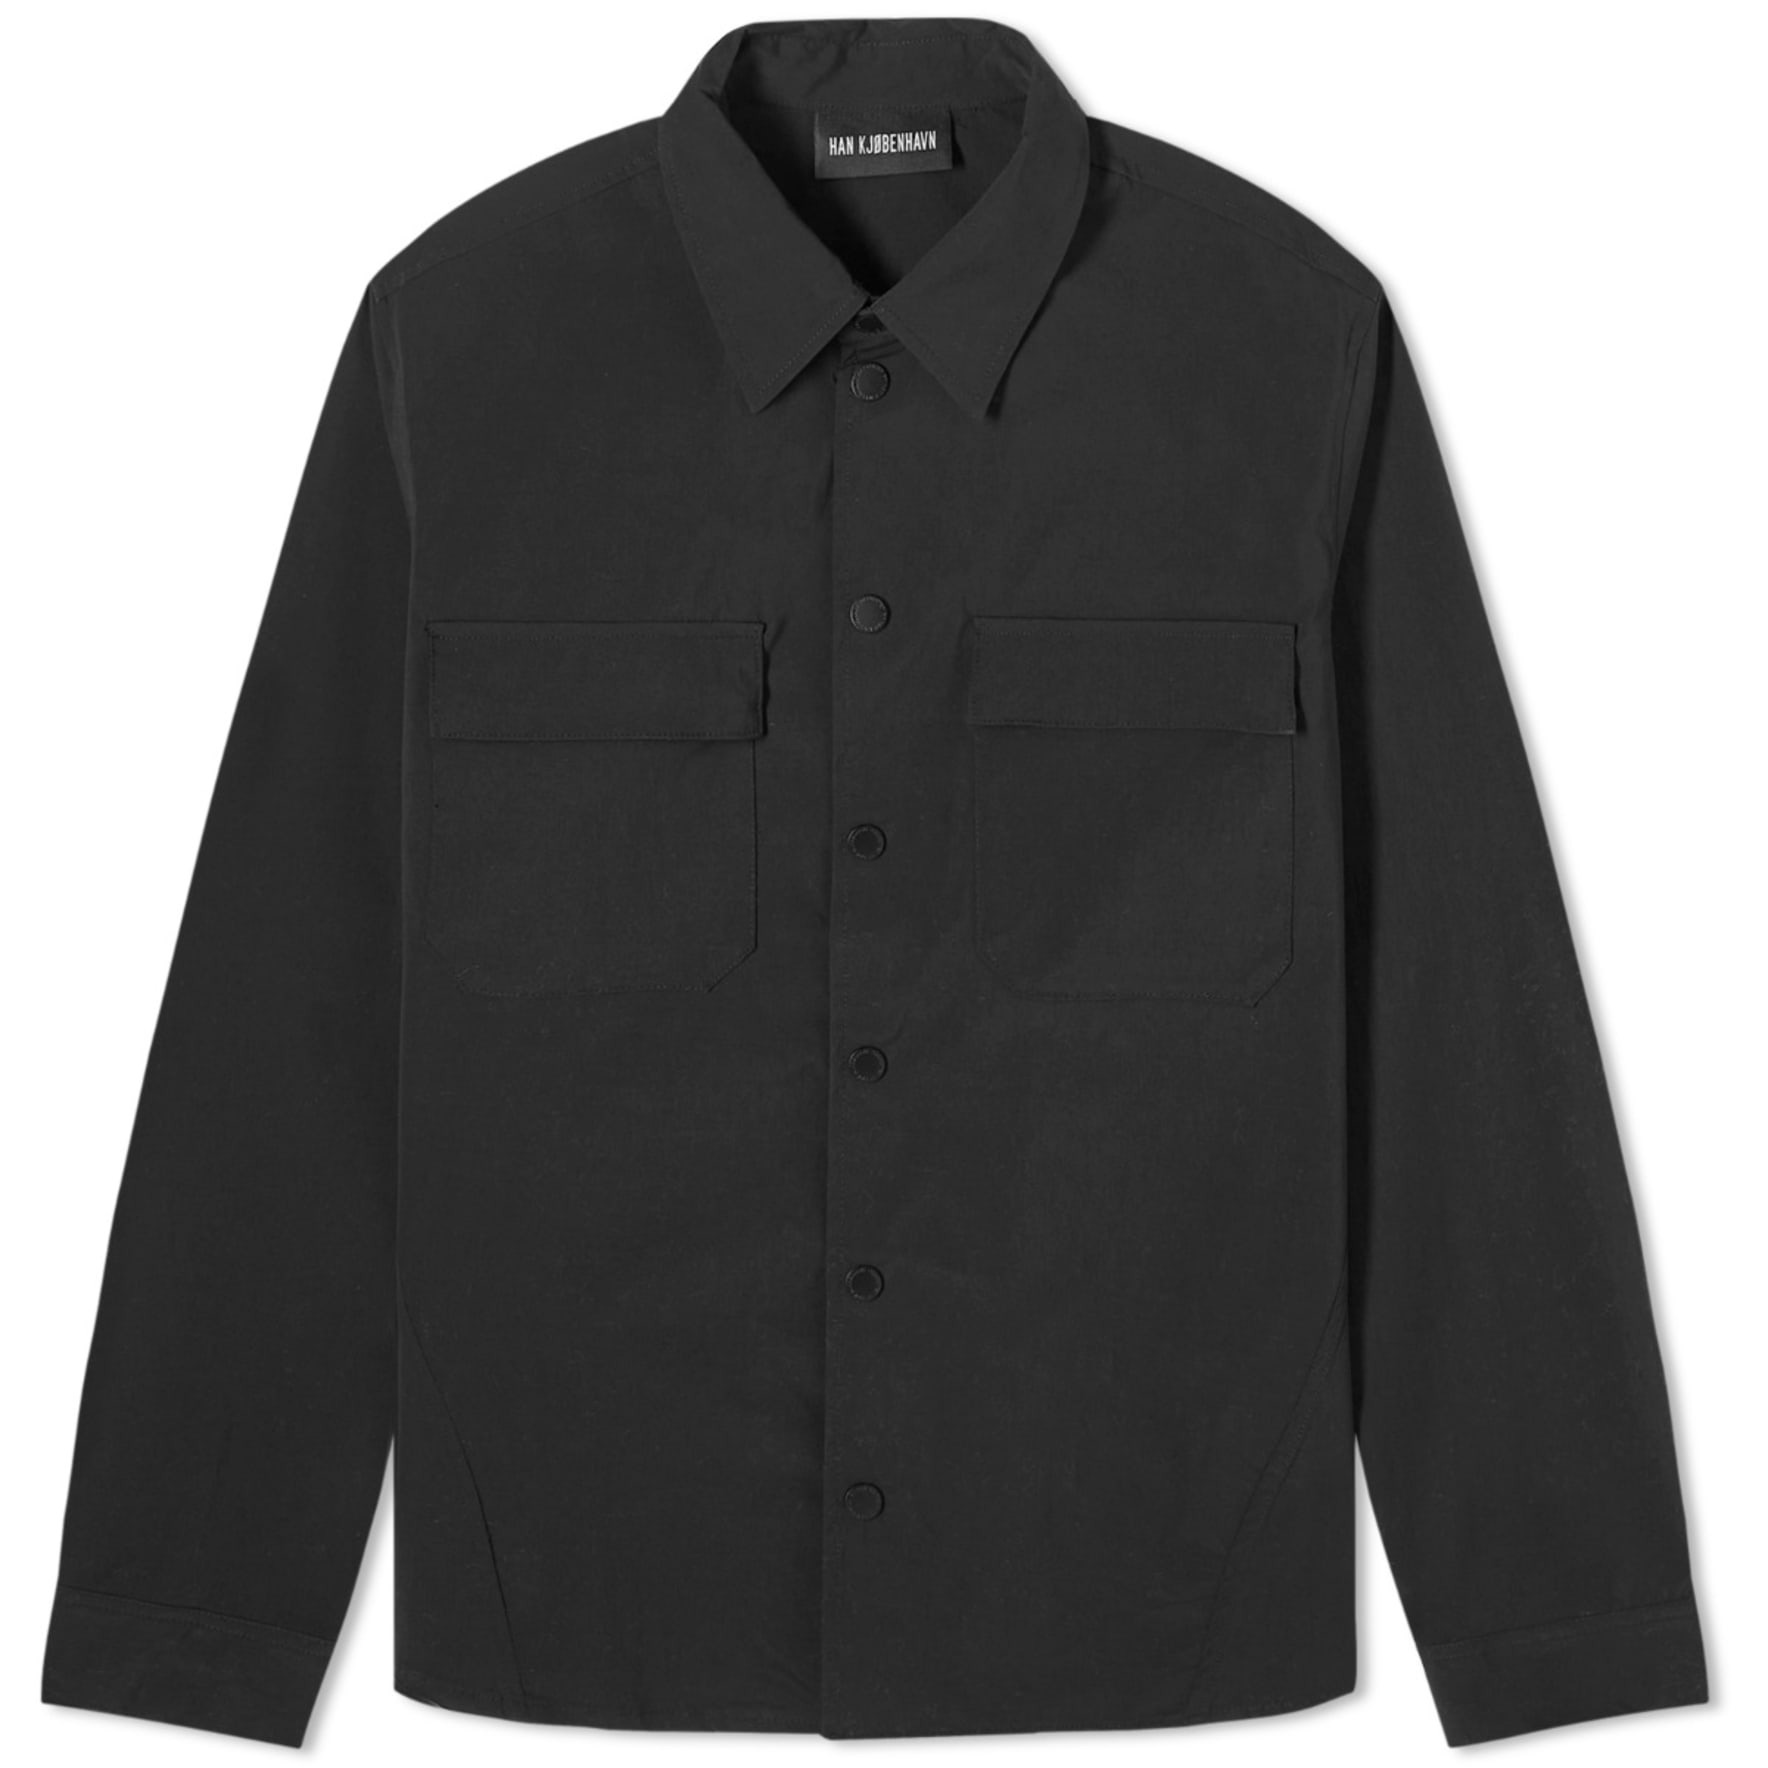 футболка han kjobenhavn размер xs черный Верхняя рубашка Han Kjobenhavn Nylon Long Sleeve, черный